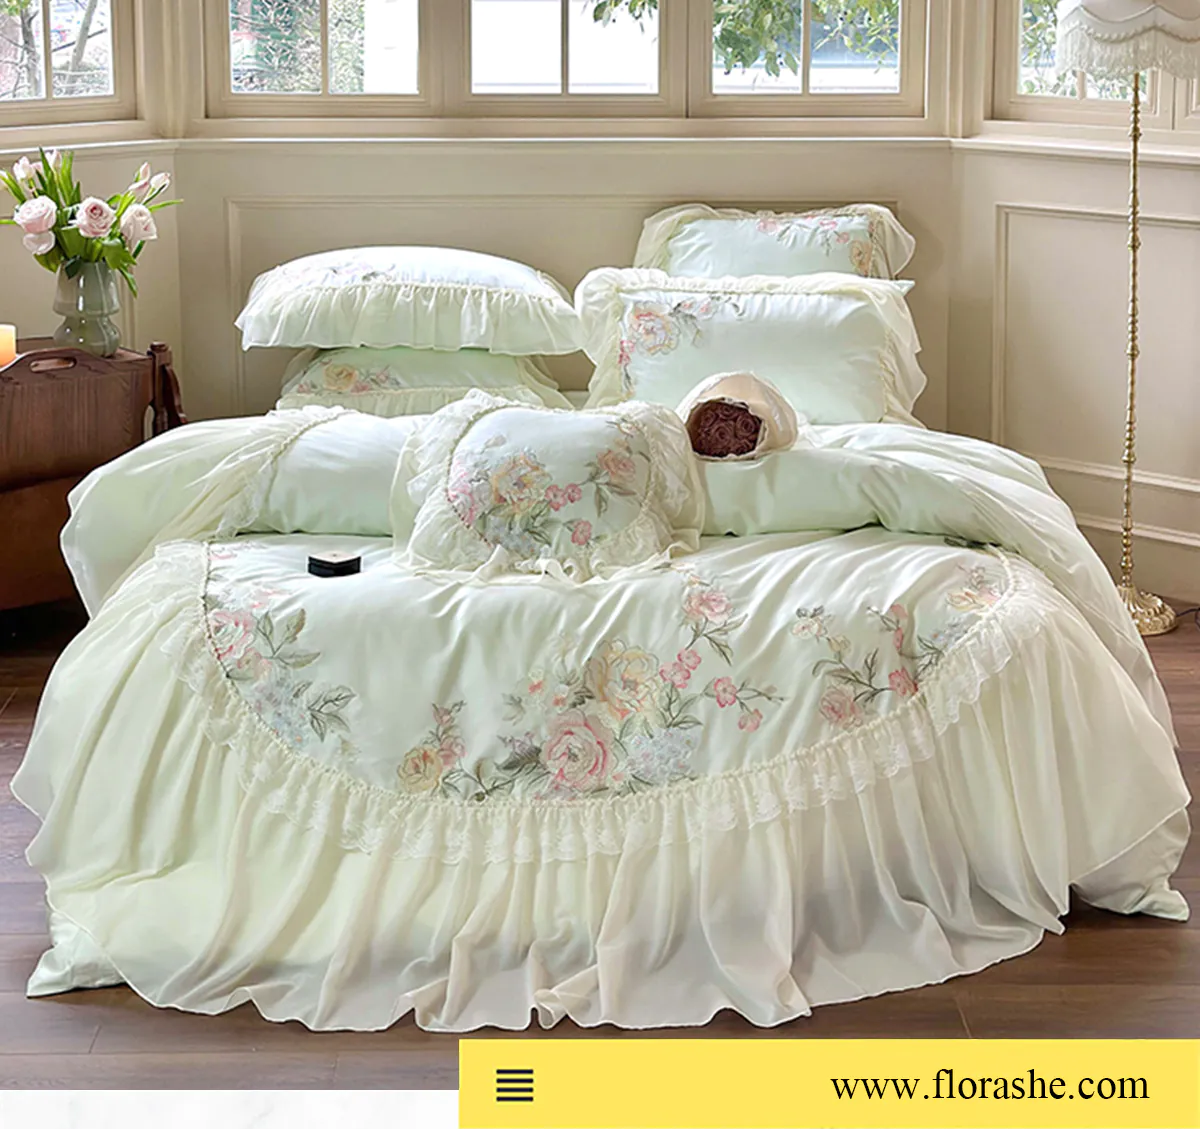 Luxury-Long-Staple-Cotton-Embroidery-Ruffle-Lace-Trim-Bedding-Set15